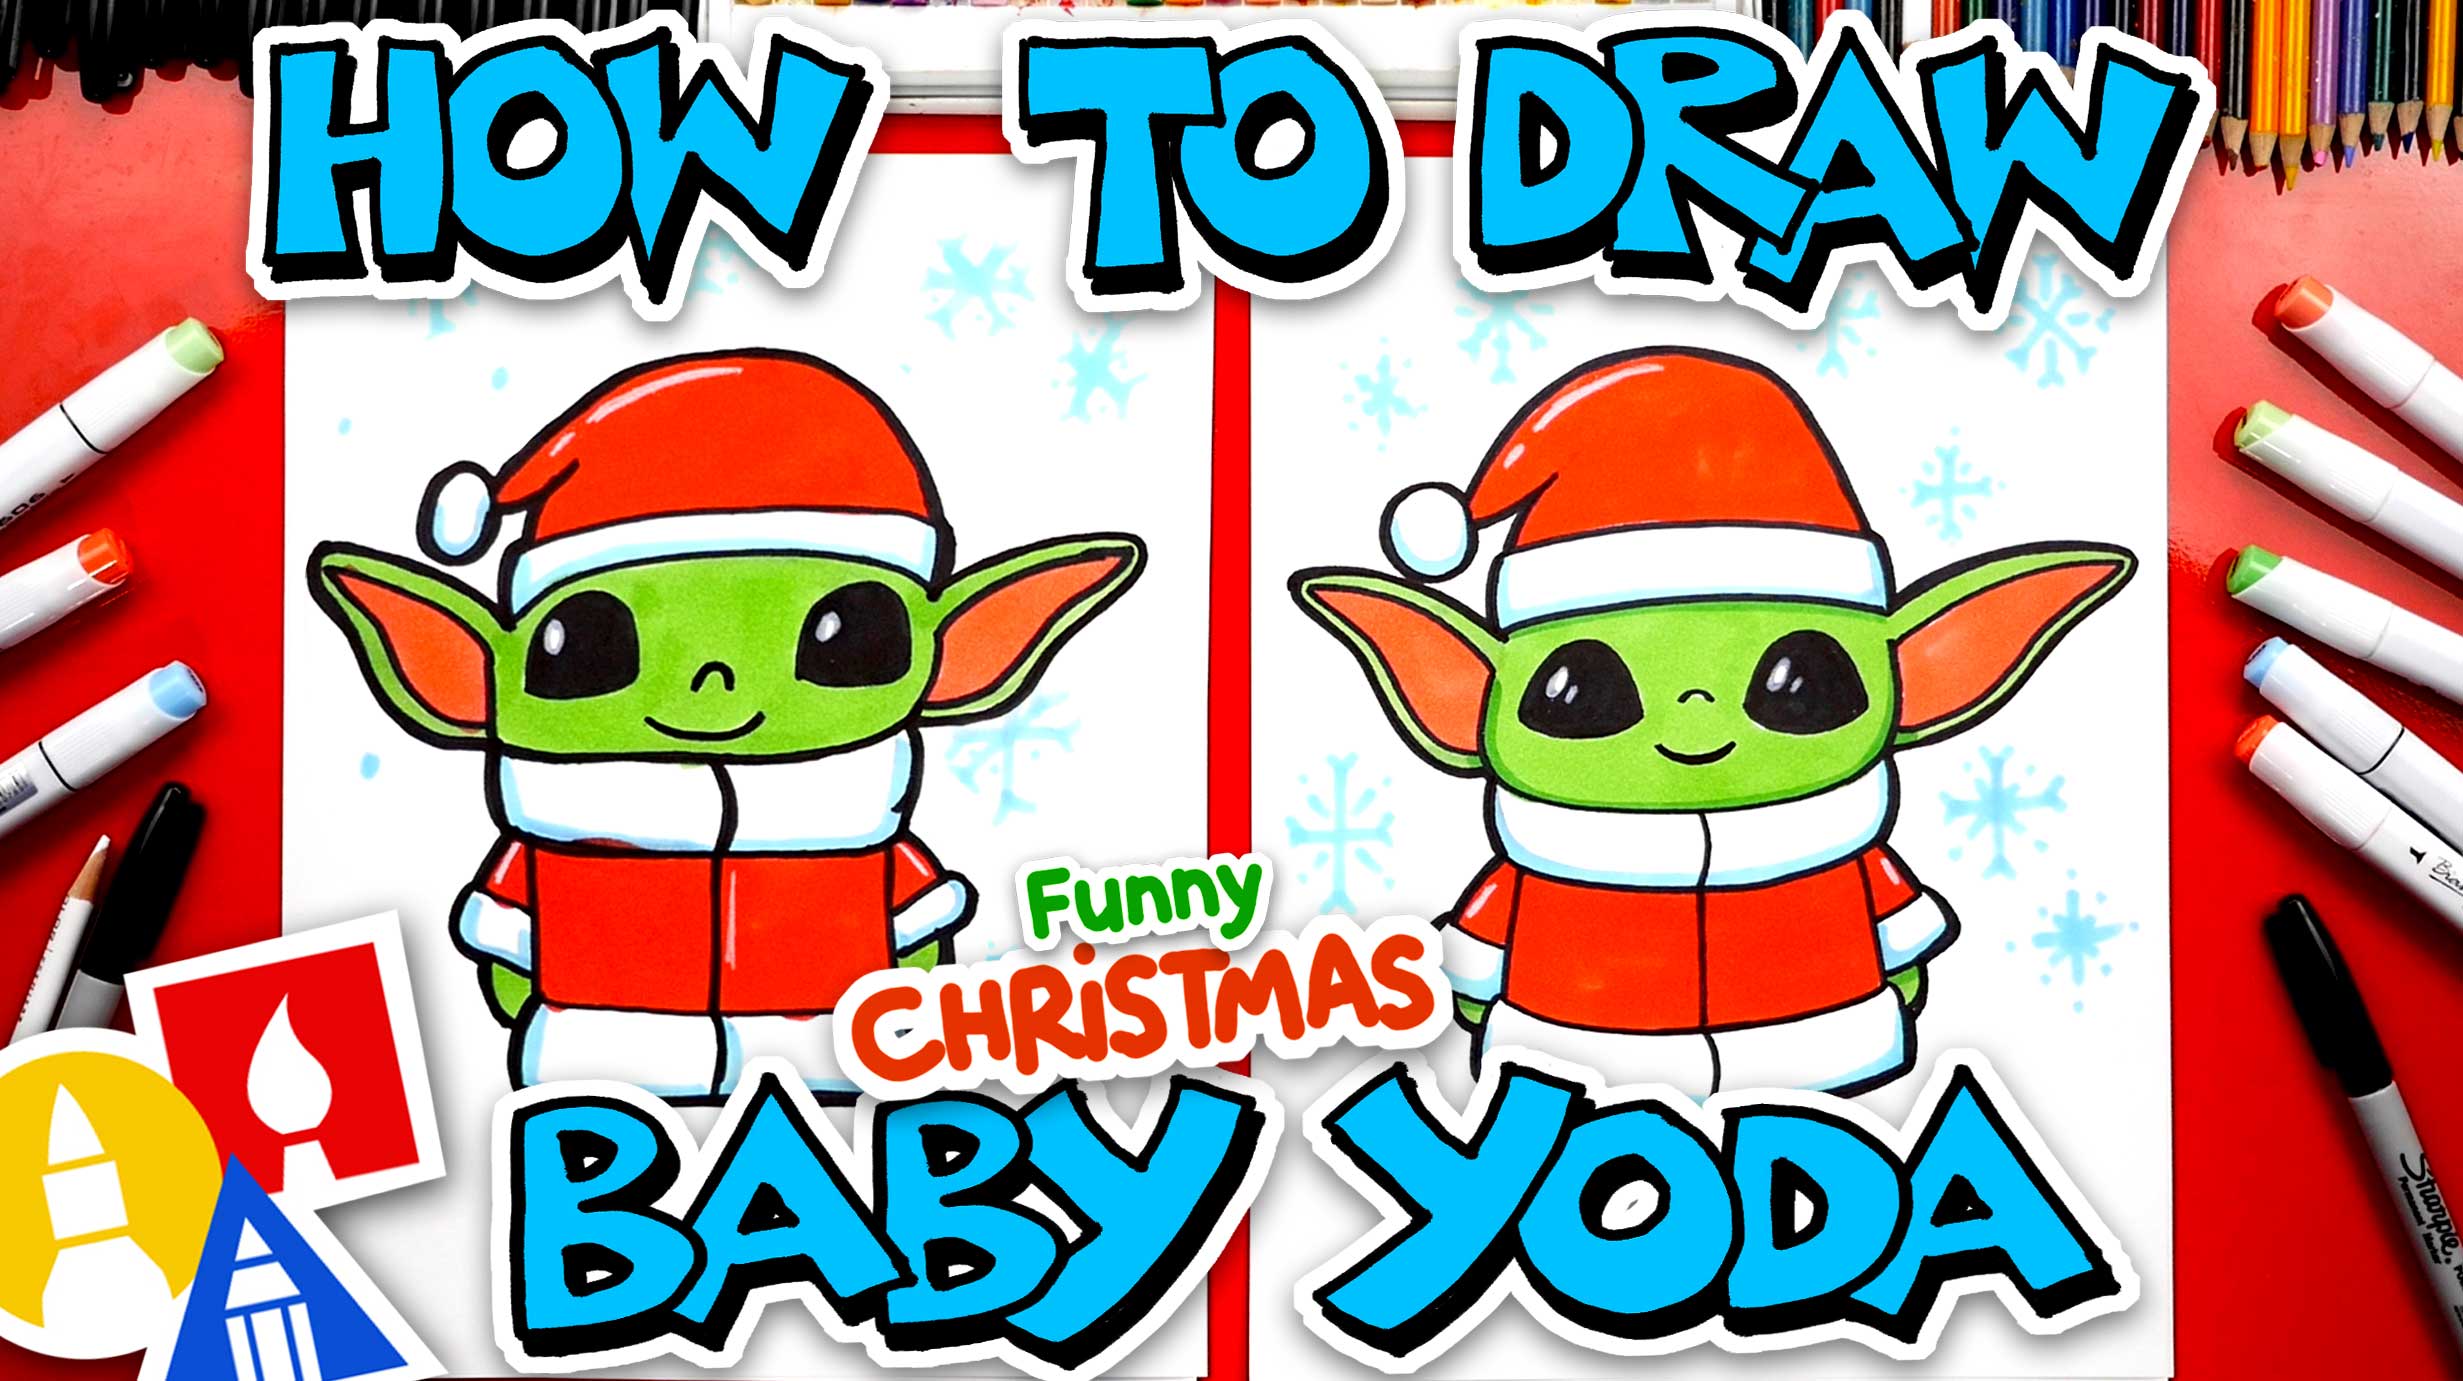 How To Draw Christmas Baby Yoda - Art For Kids Hub